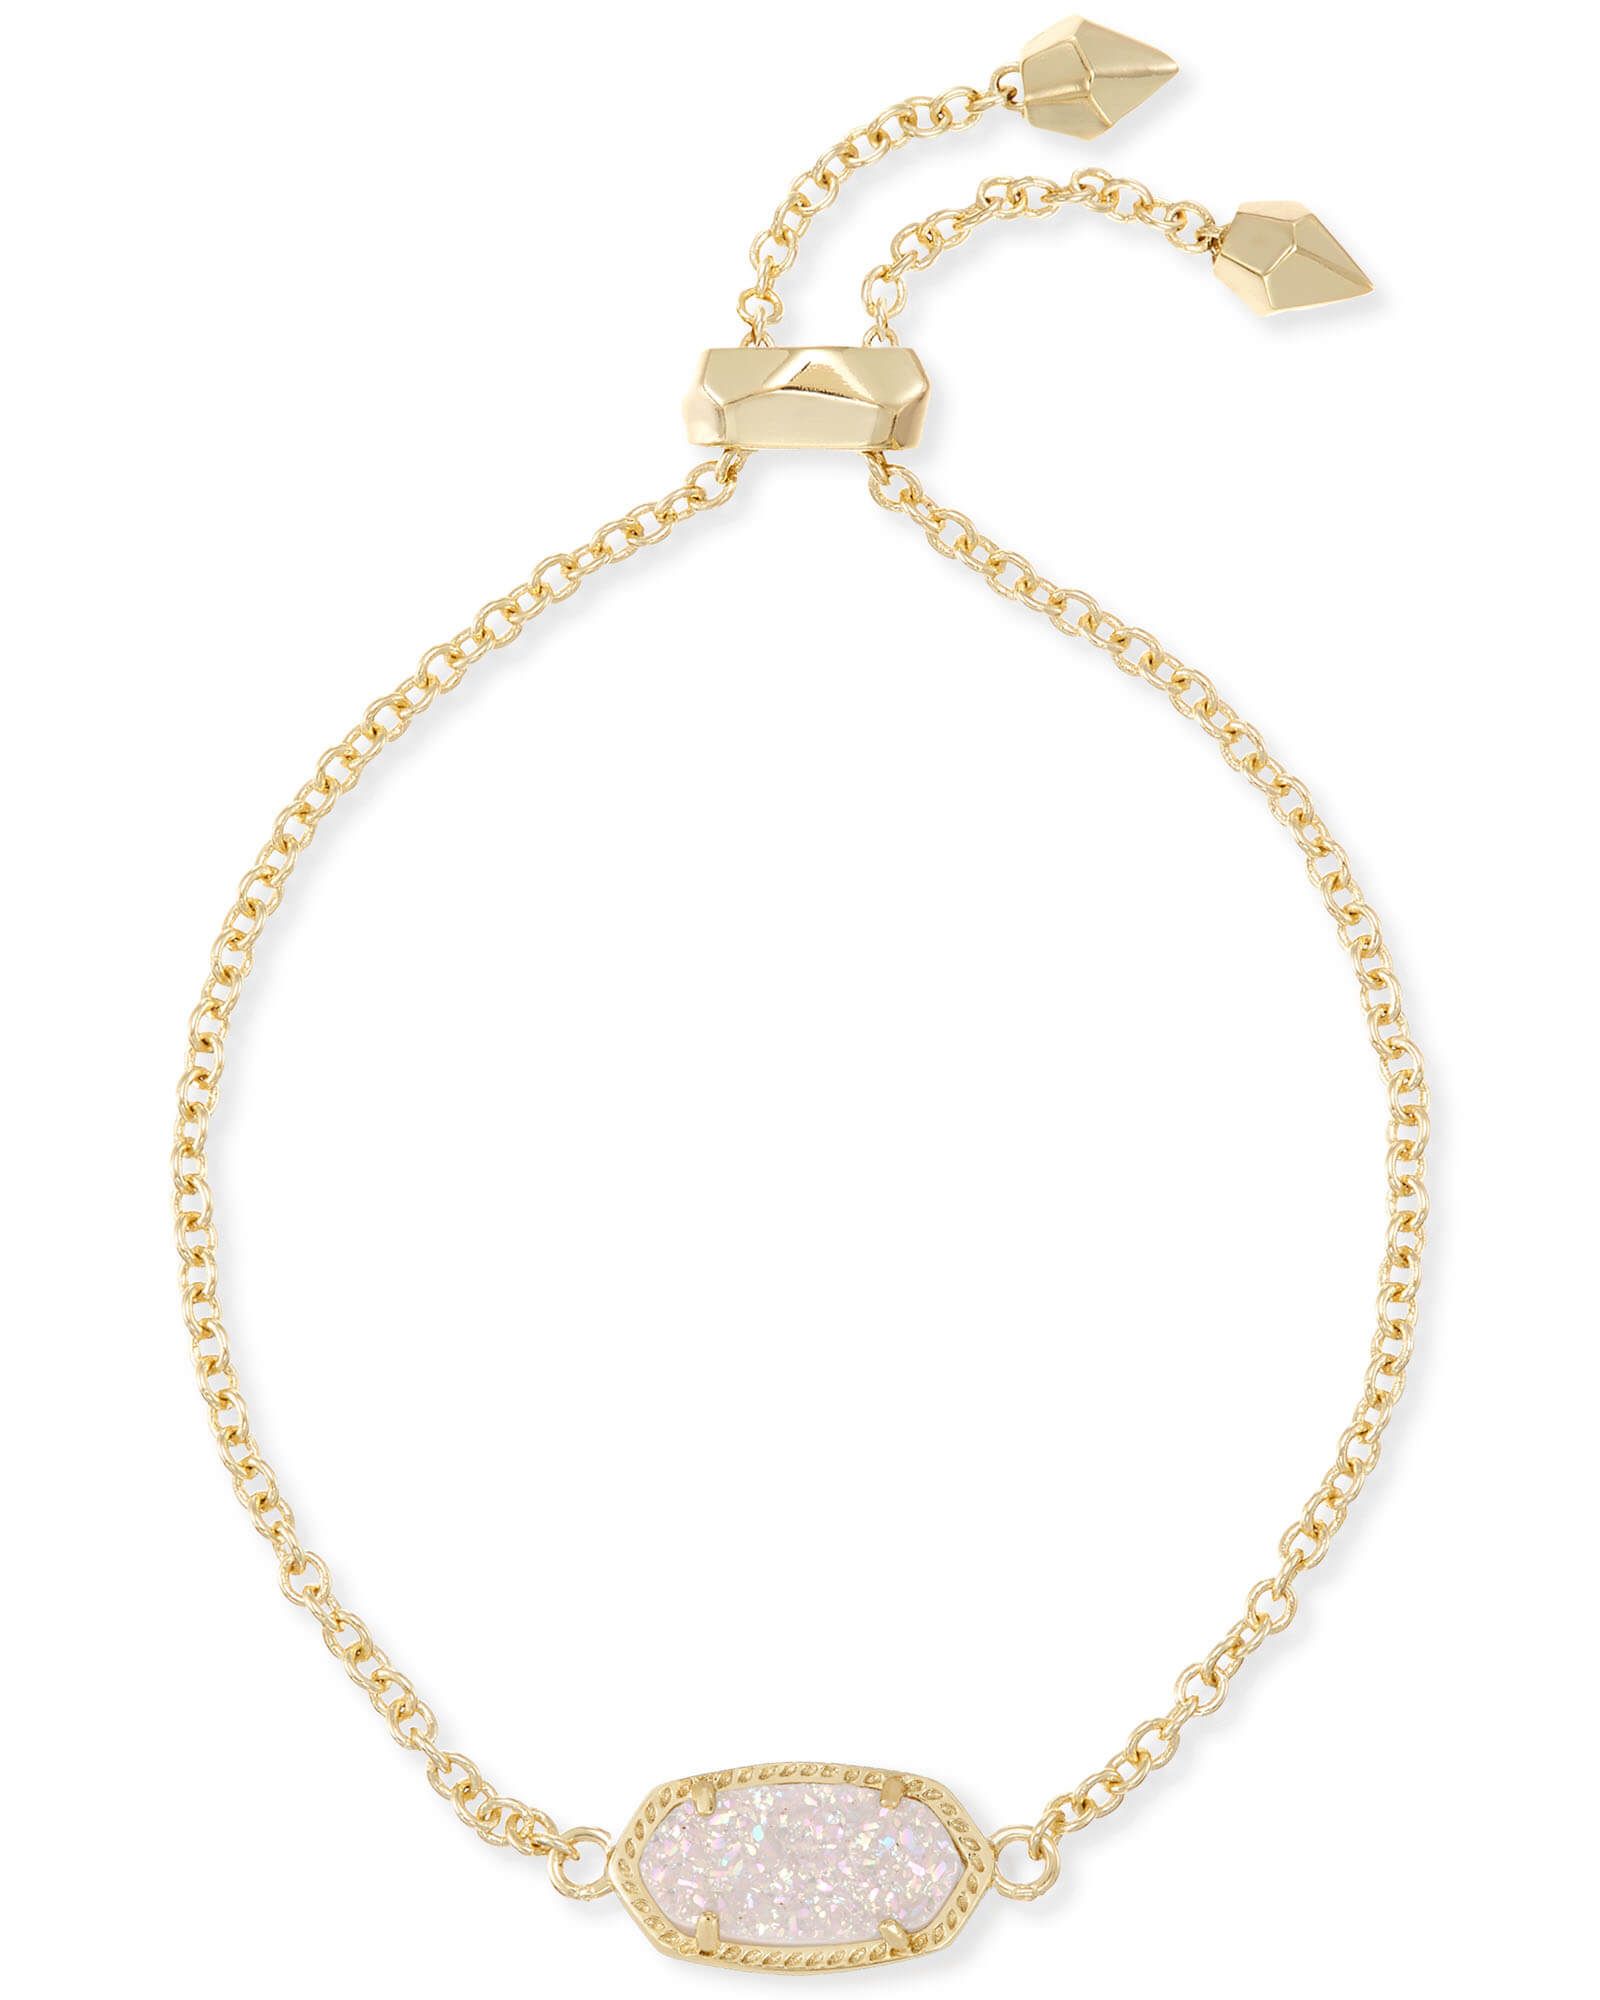 Elaina Gold Chain Bracelet in Iridescent Drusy | Kendra Scott | Kendra Scott